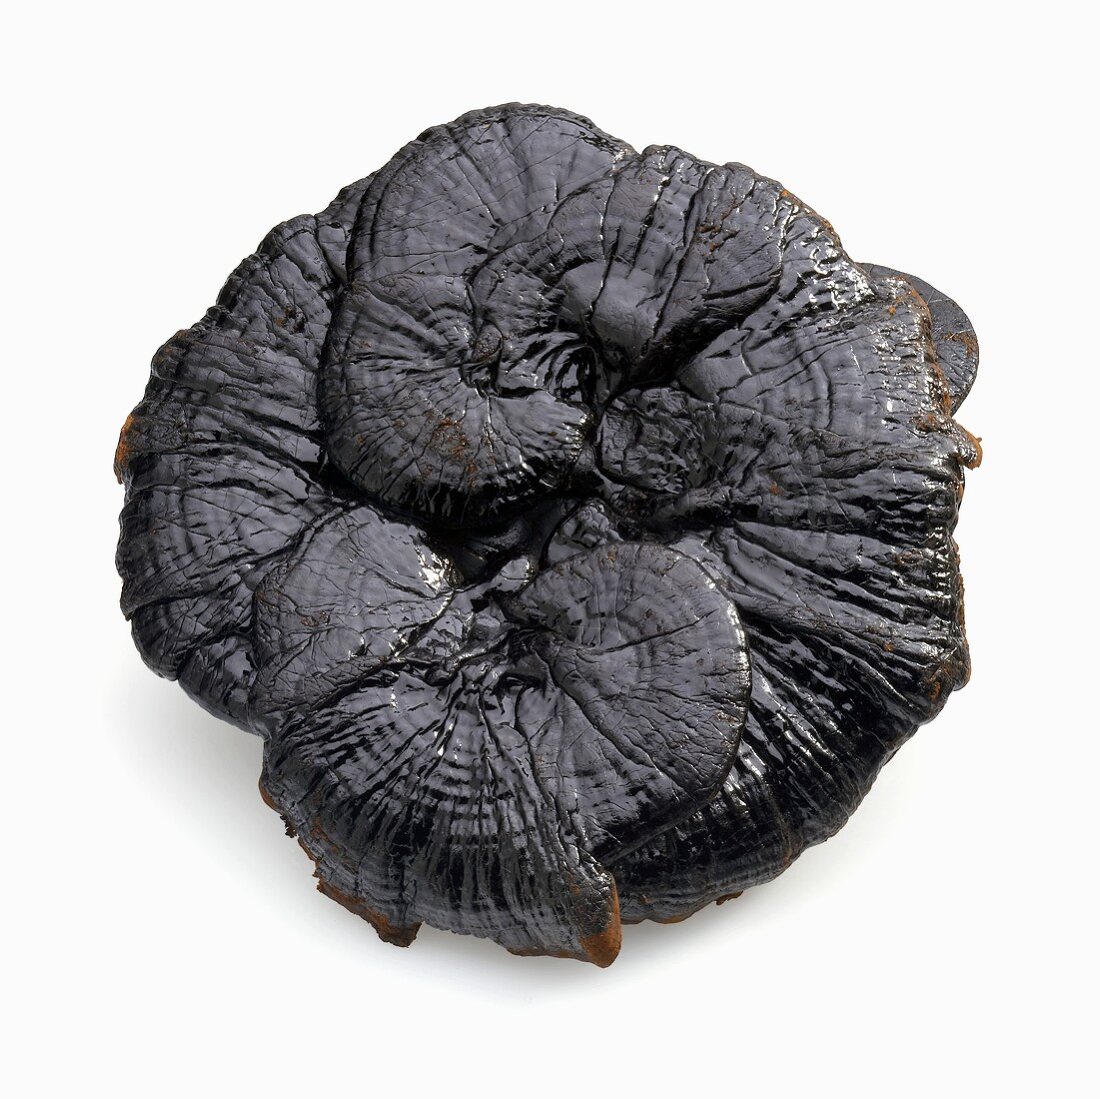 Black Reishi Mushroom